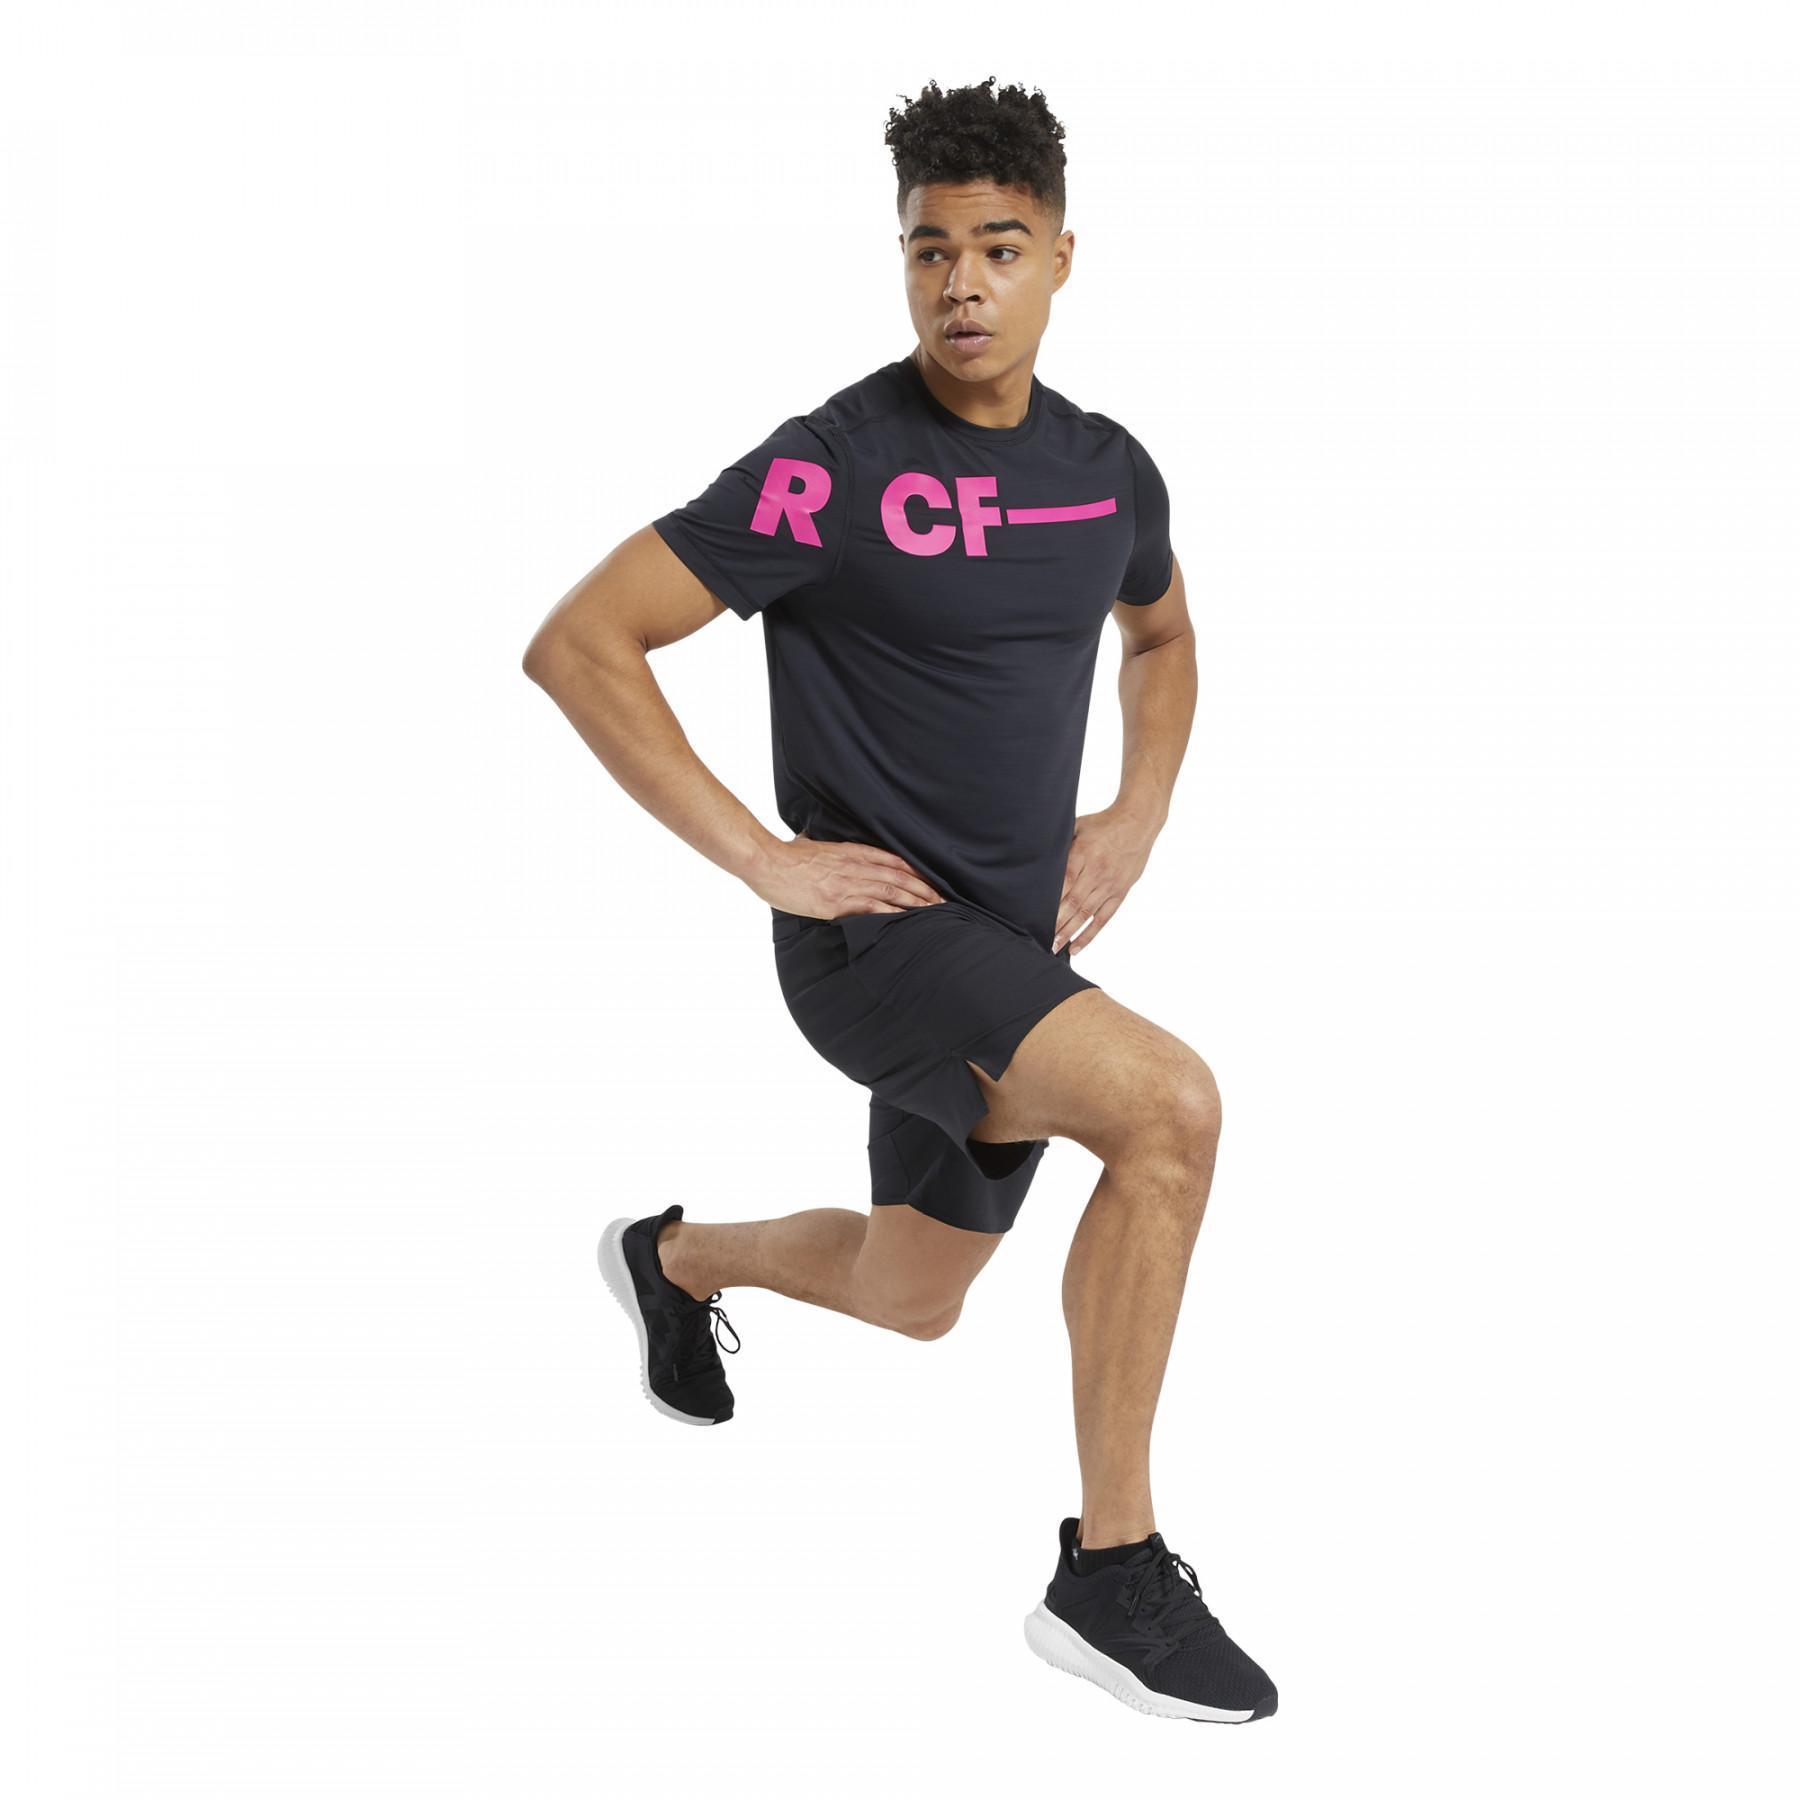 Camiseta Reebok CrossFit® Activchill